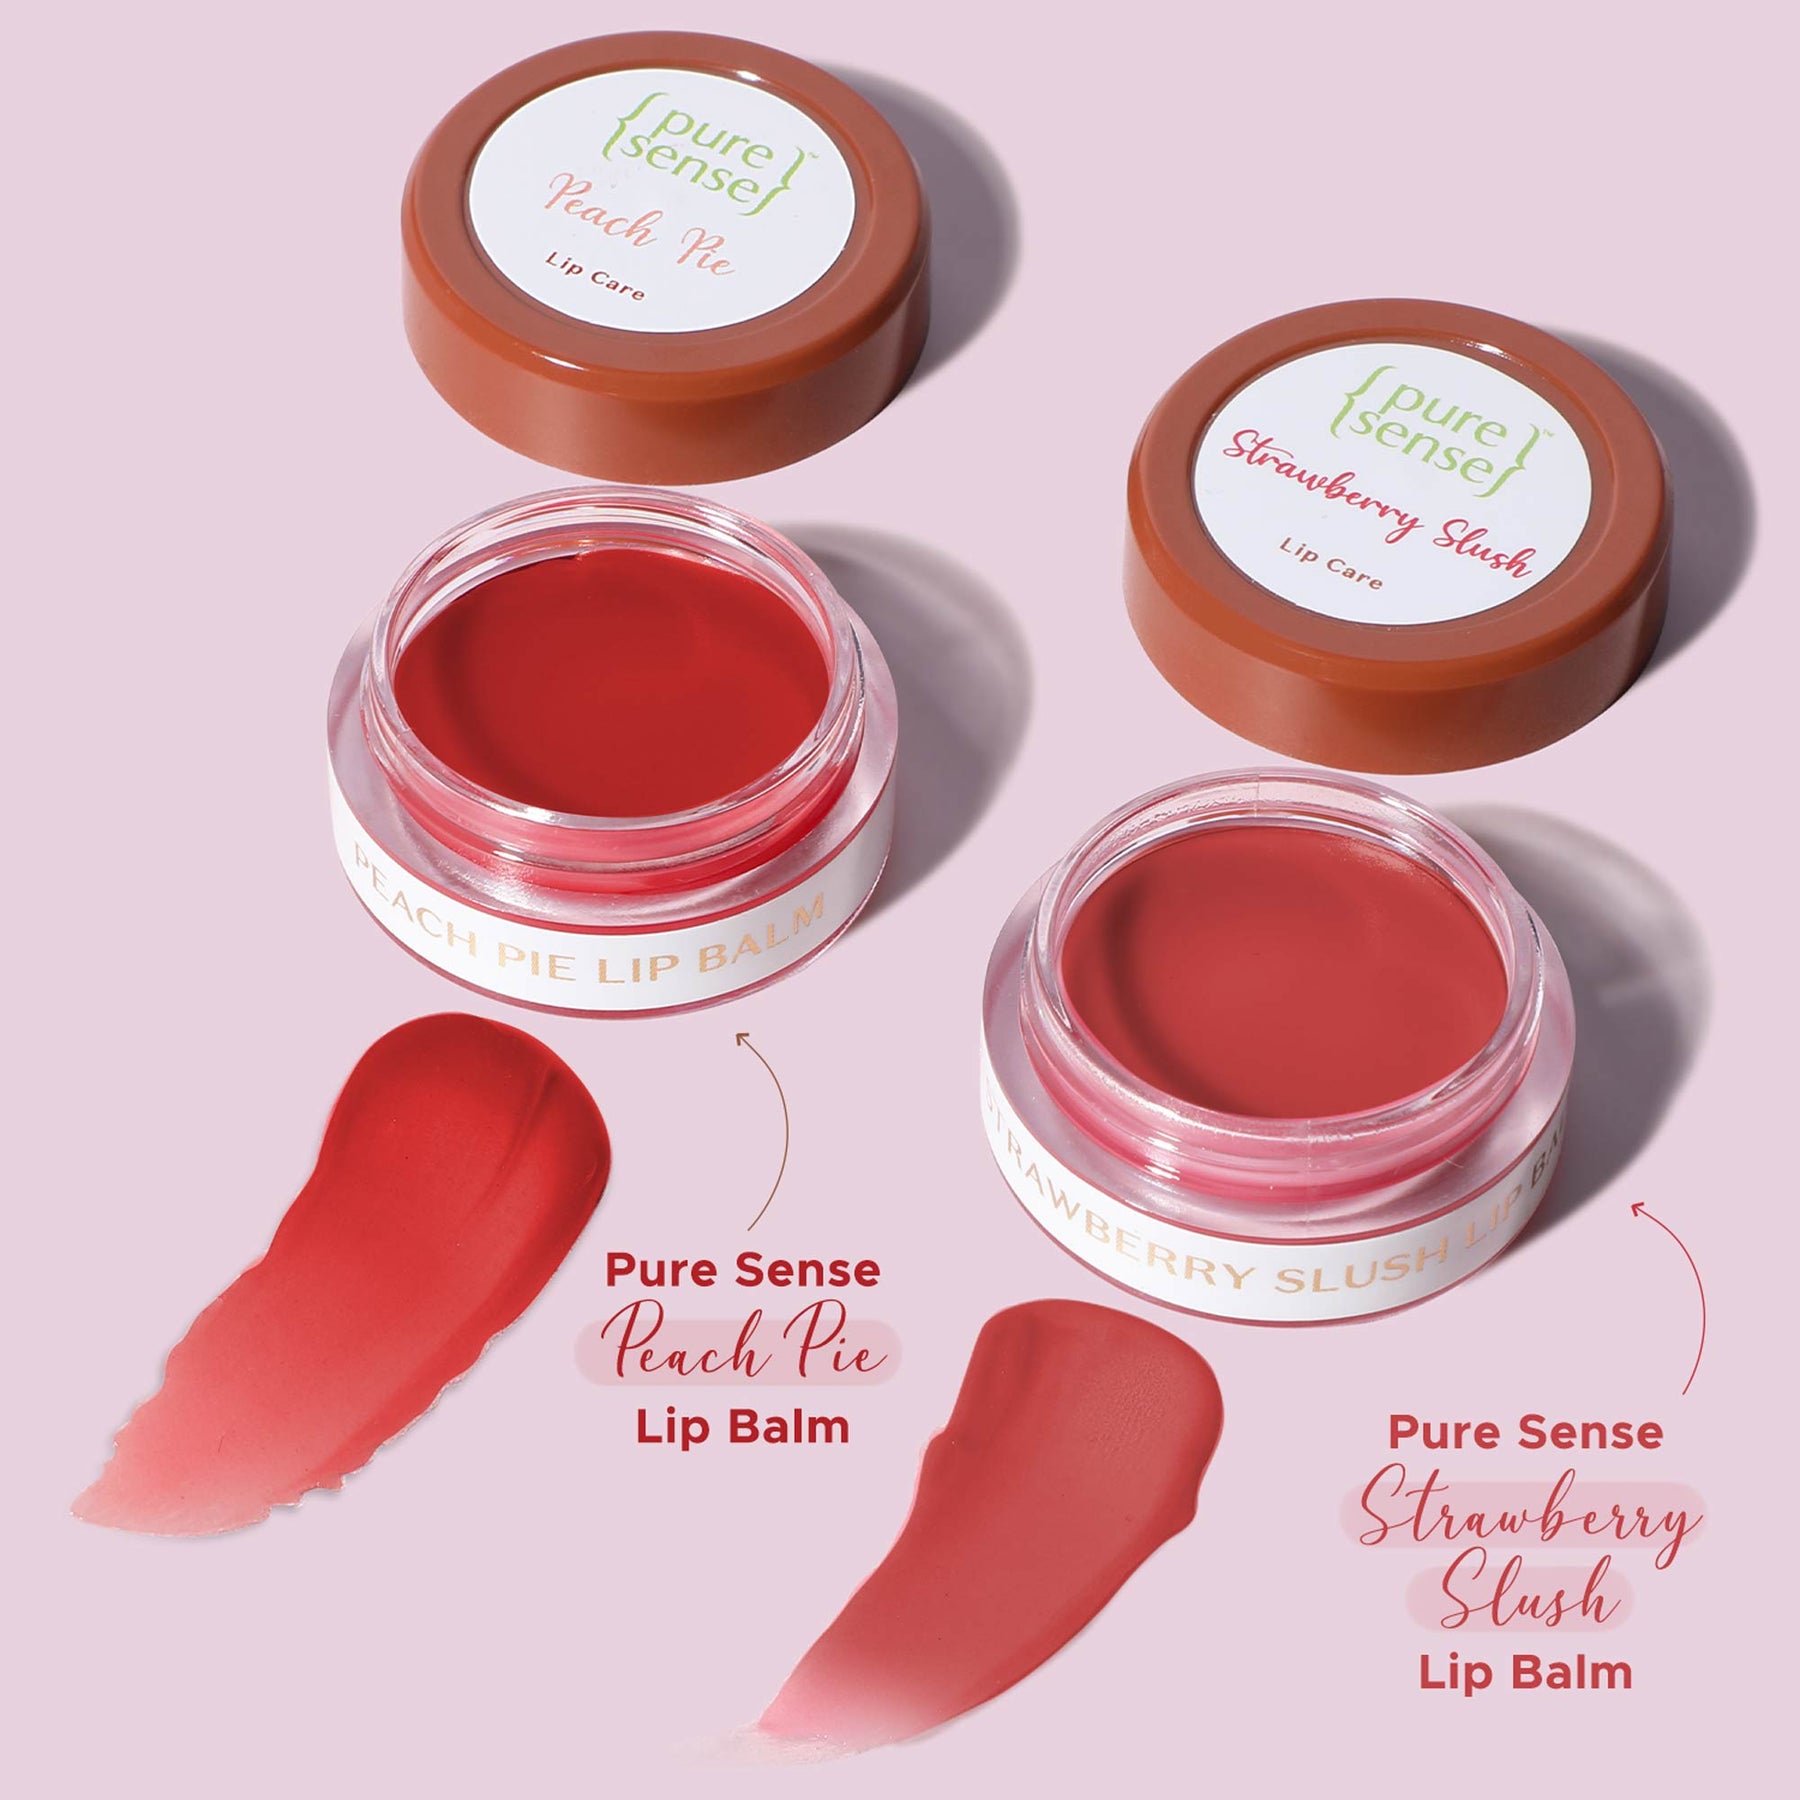 Peach Pie Lip Balm 5ml+ Strawberry Slush Lip Balm 5ml | From the makers of Parachute Advansed | 10ml